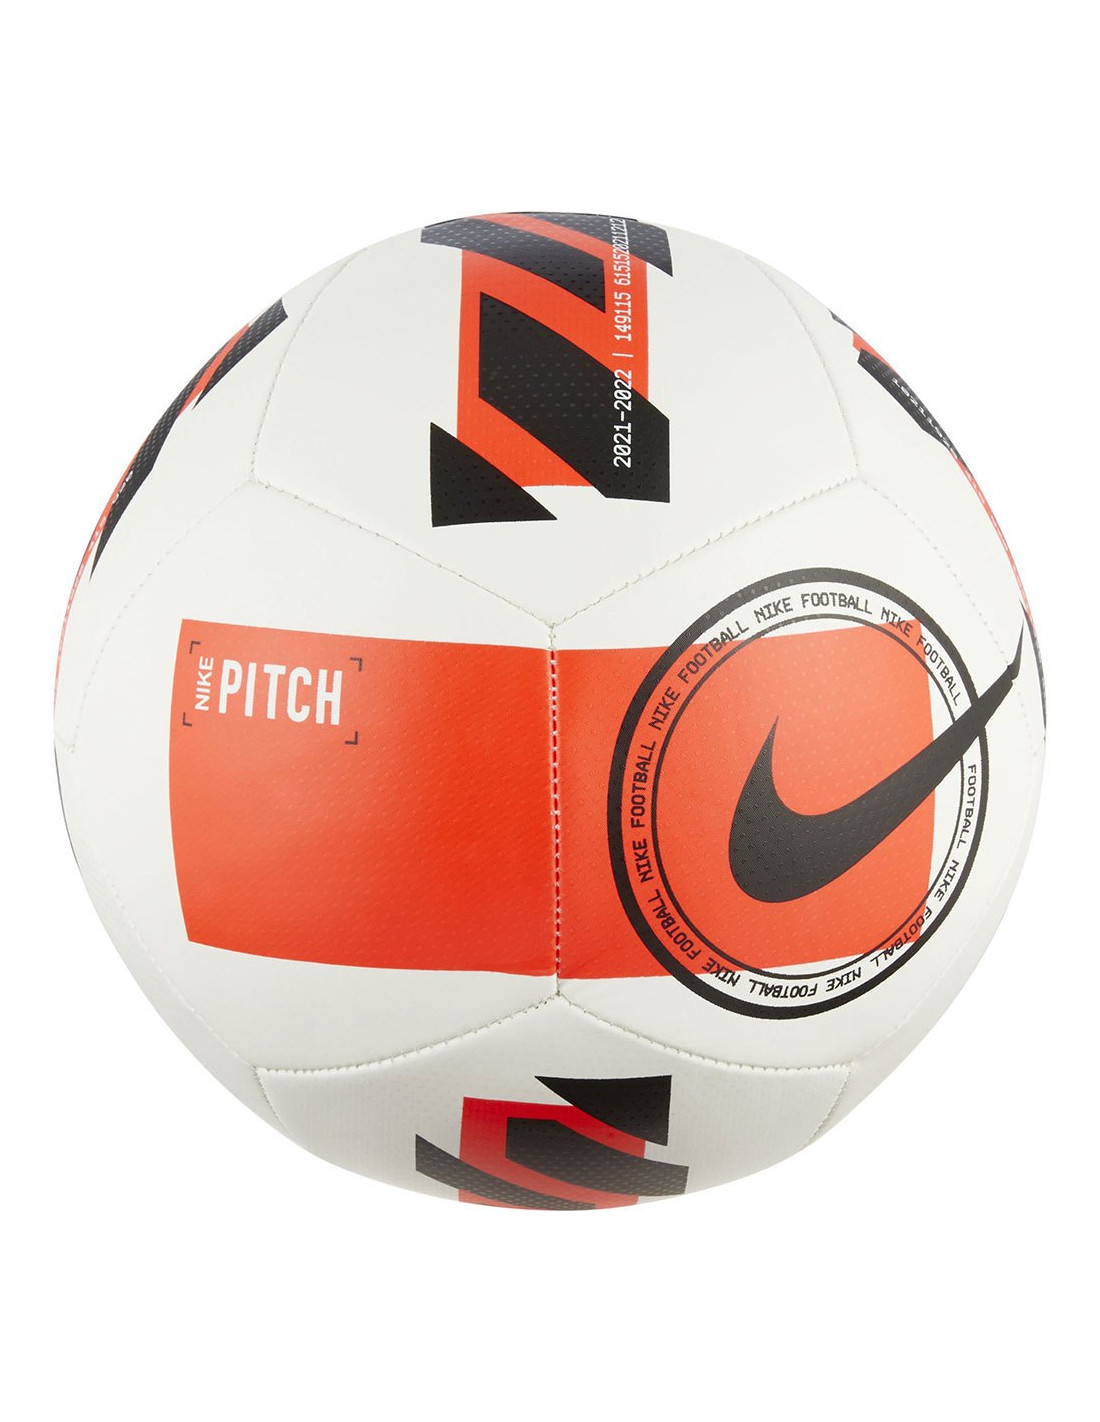 aceptable Miau miau Artificial Nike Pitch soccer ball c/o blanco